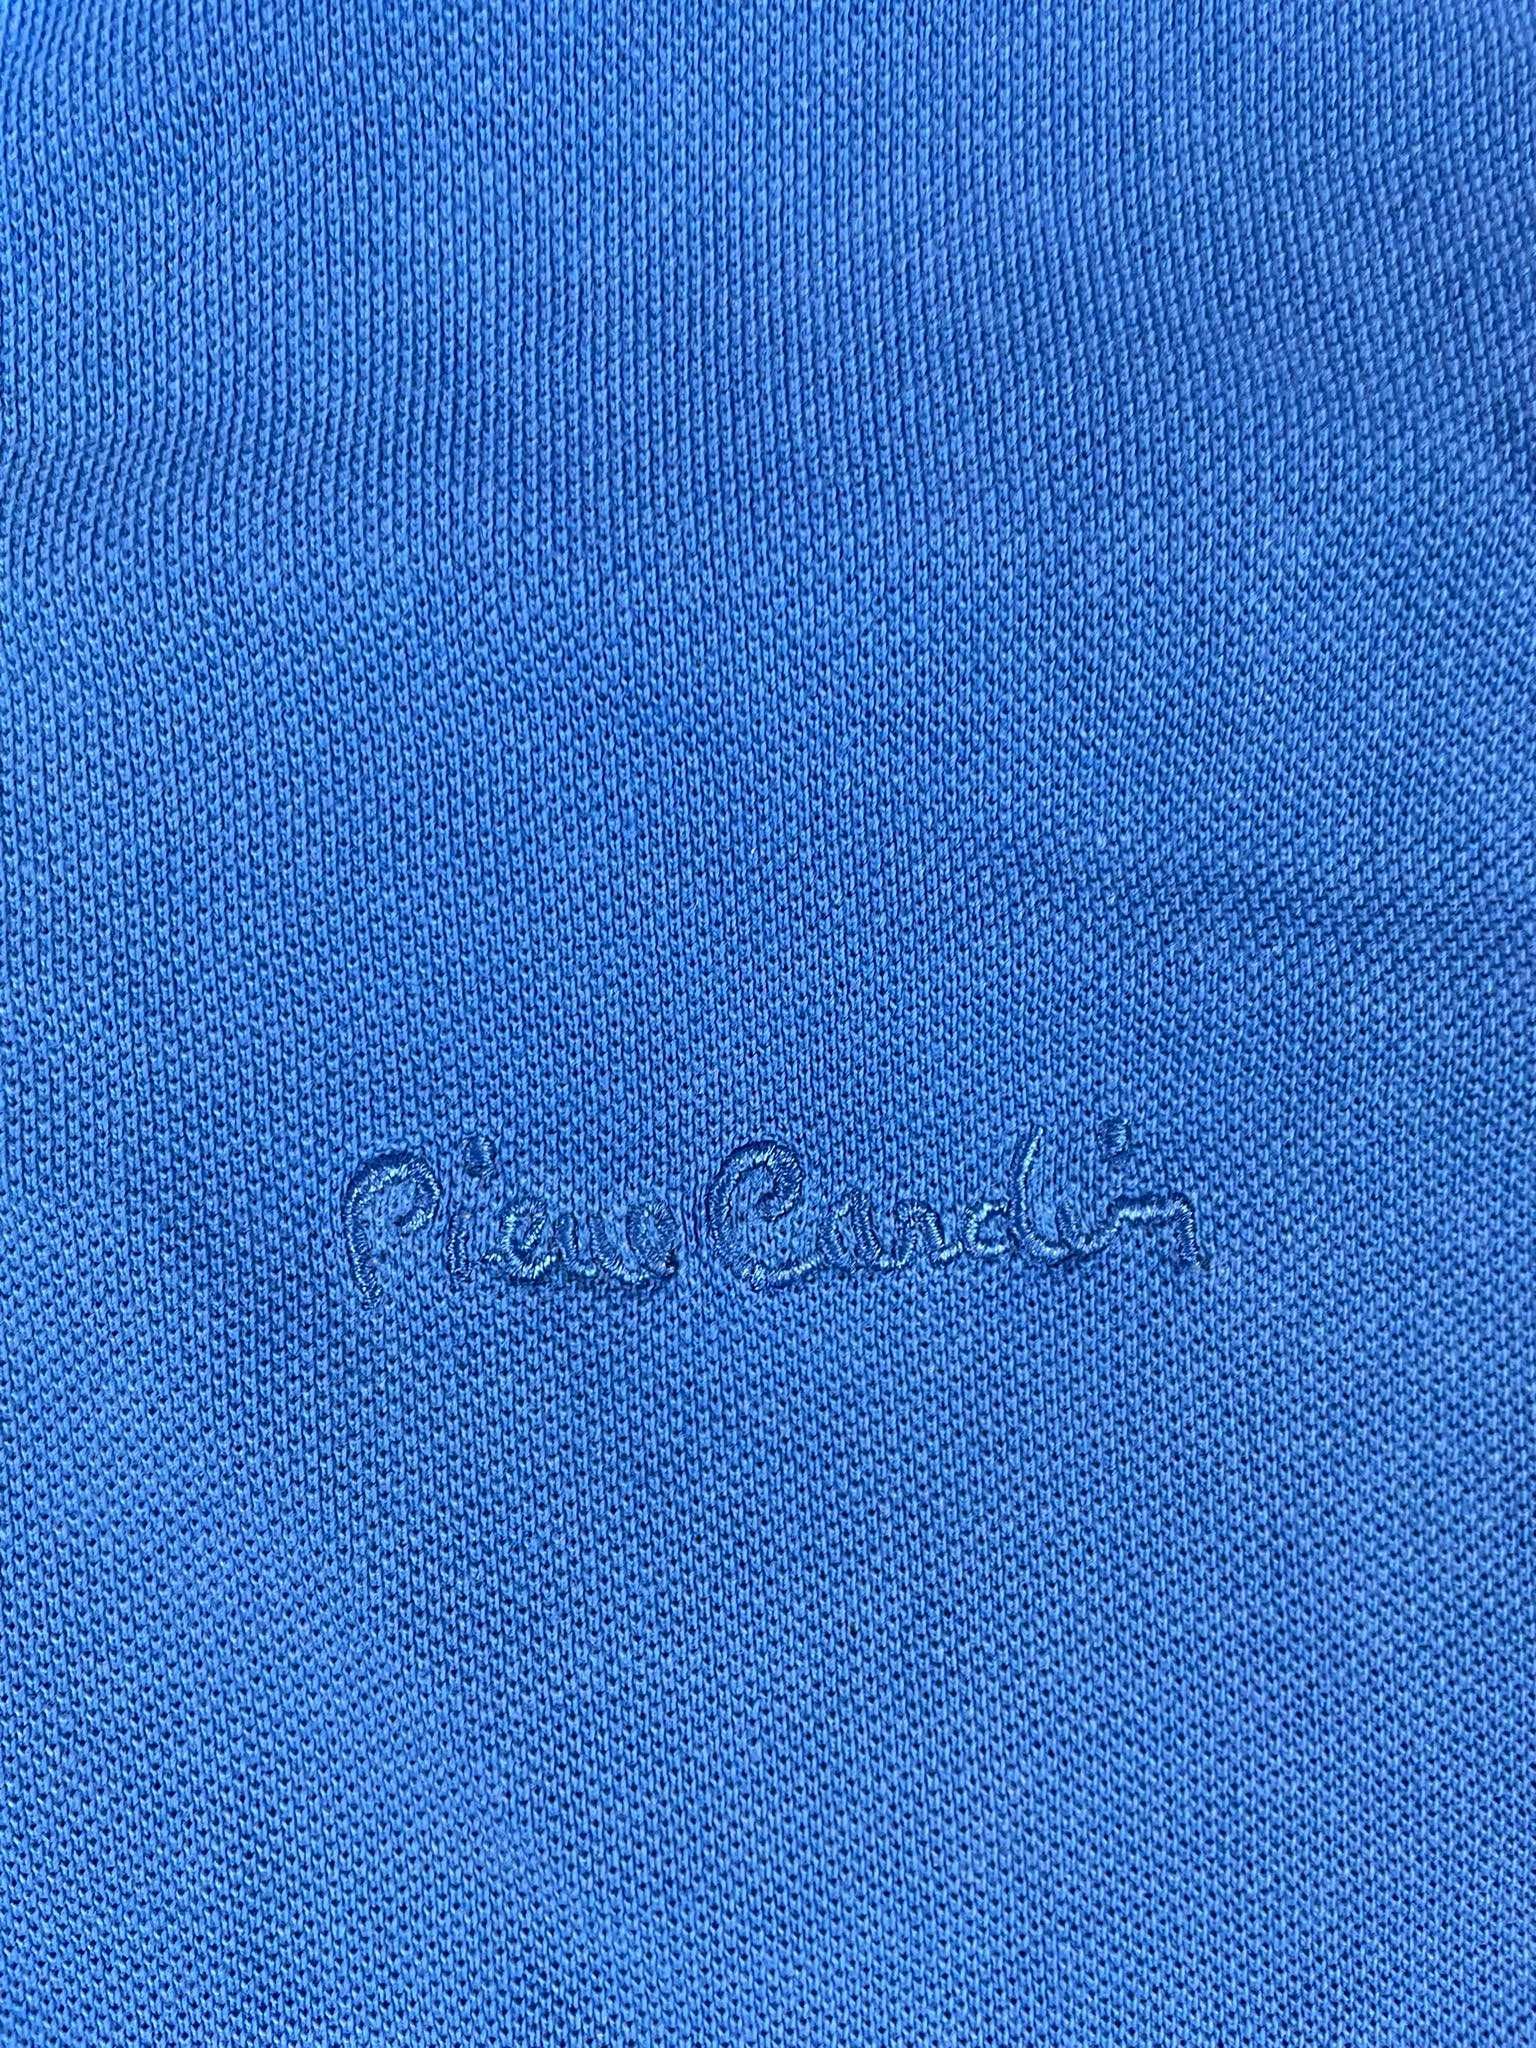 Koszulka Polo Pierre Cardin regular fit niebieska XL